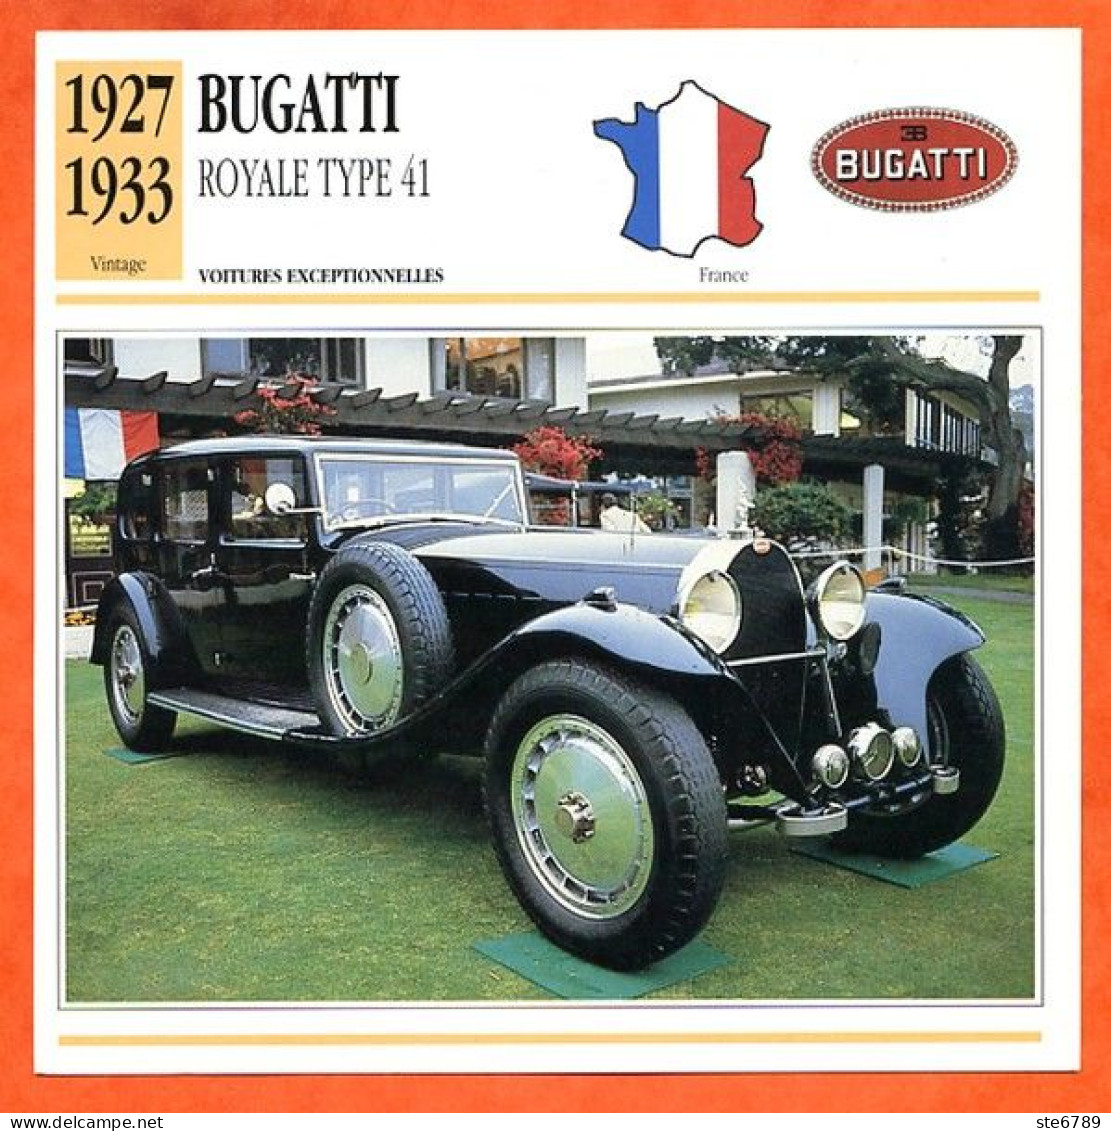 BUGATTI ROYALE TYPE 41  1927  Voiture  France  Auto Fiche Technique Automobile - Cars